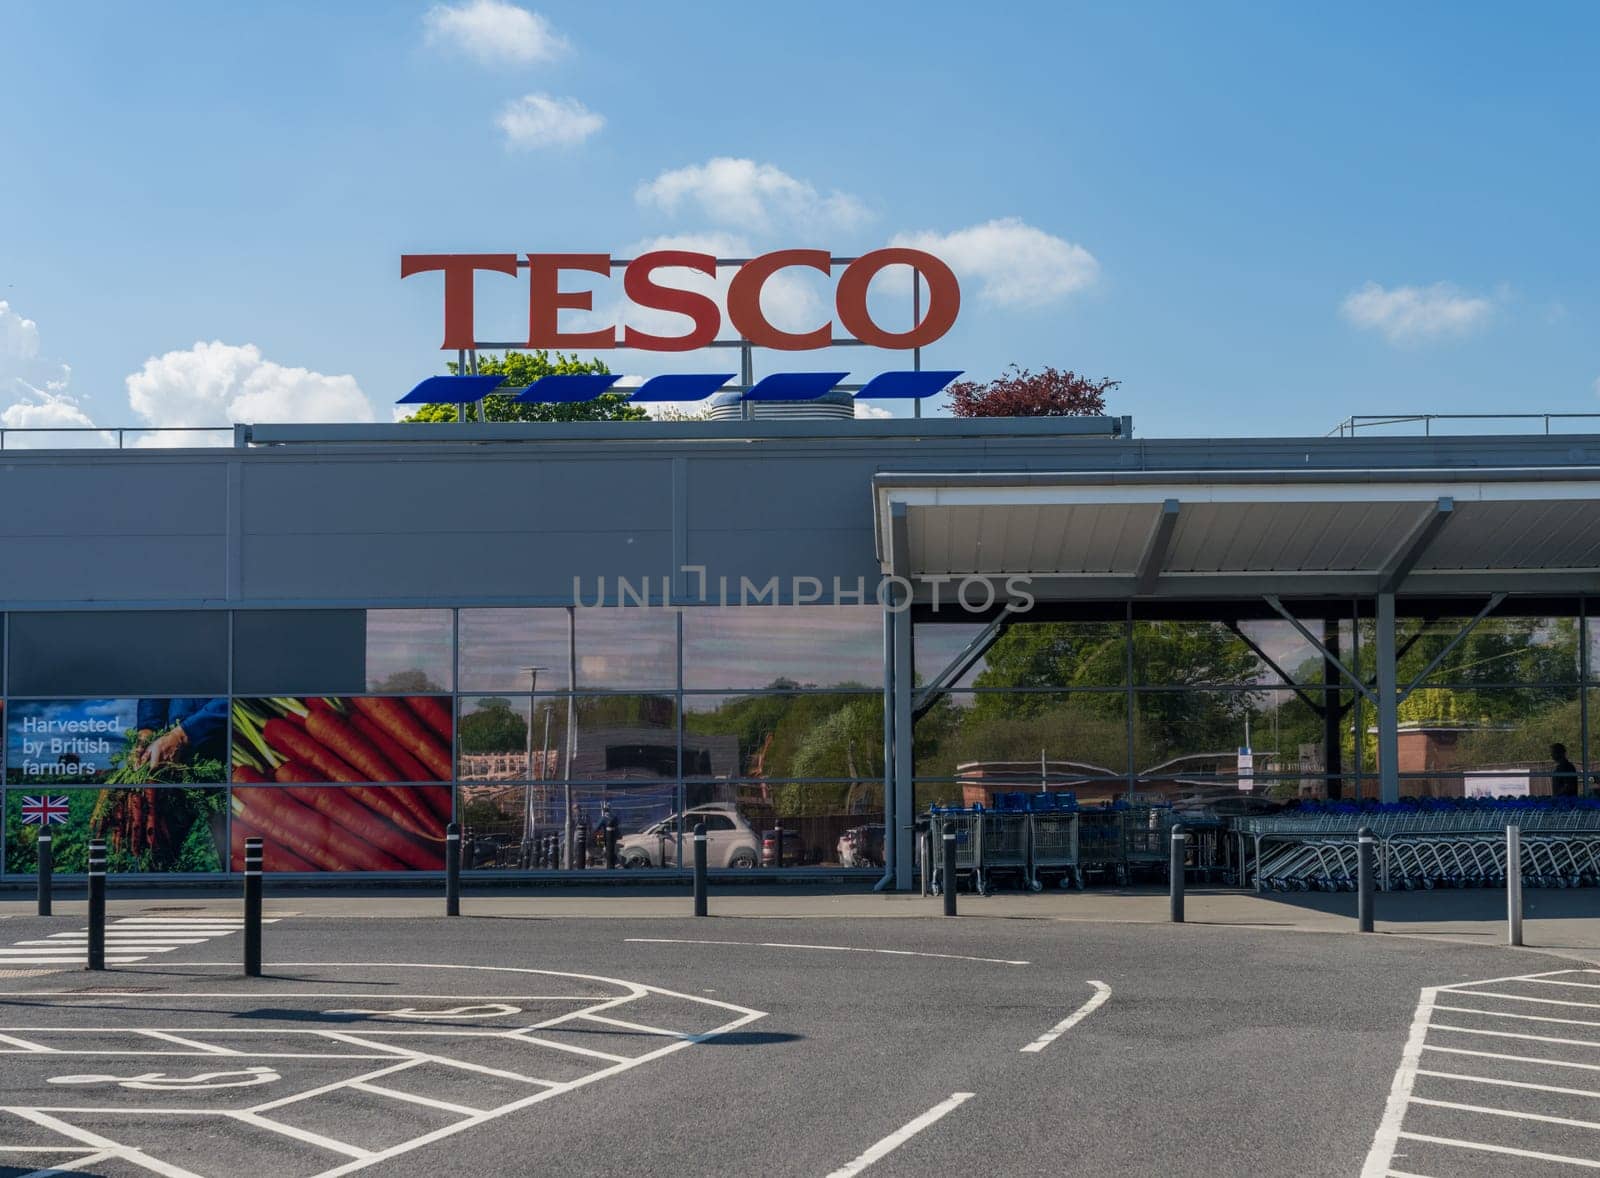 Tesco supermarket in Ellesmere Shropshire by steheap